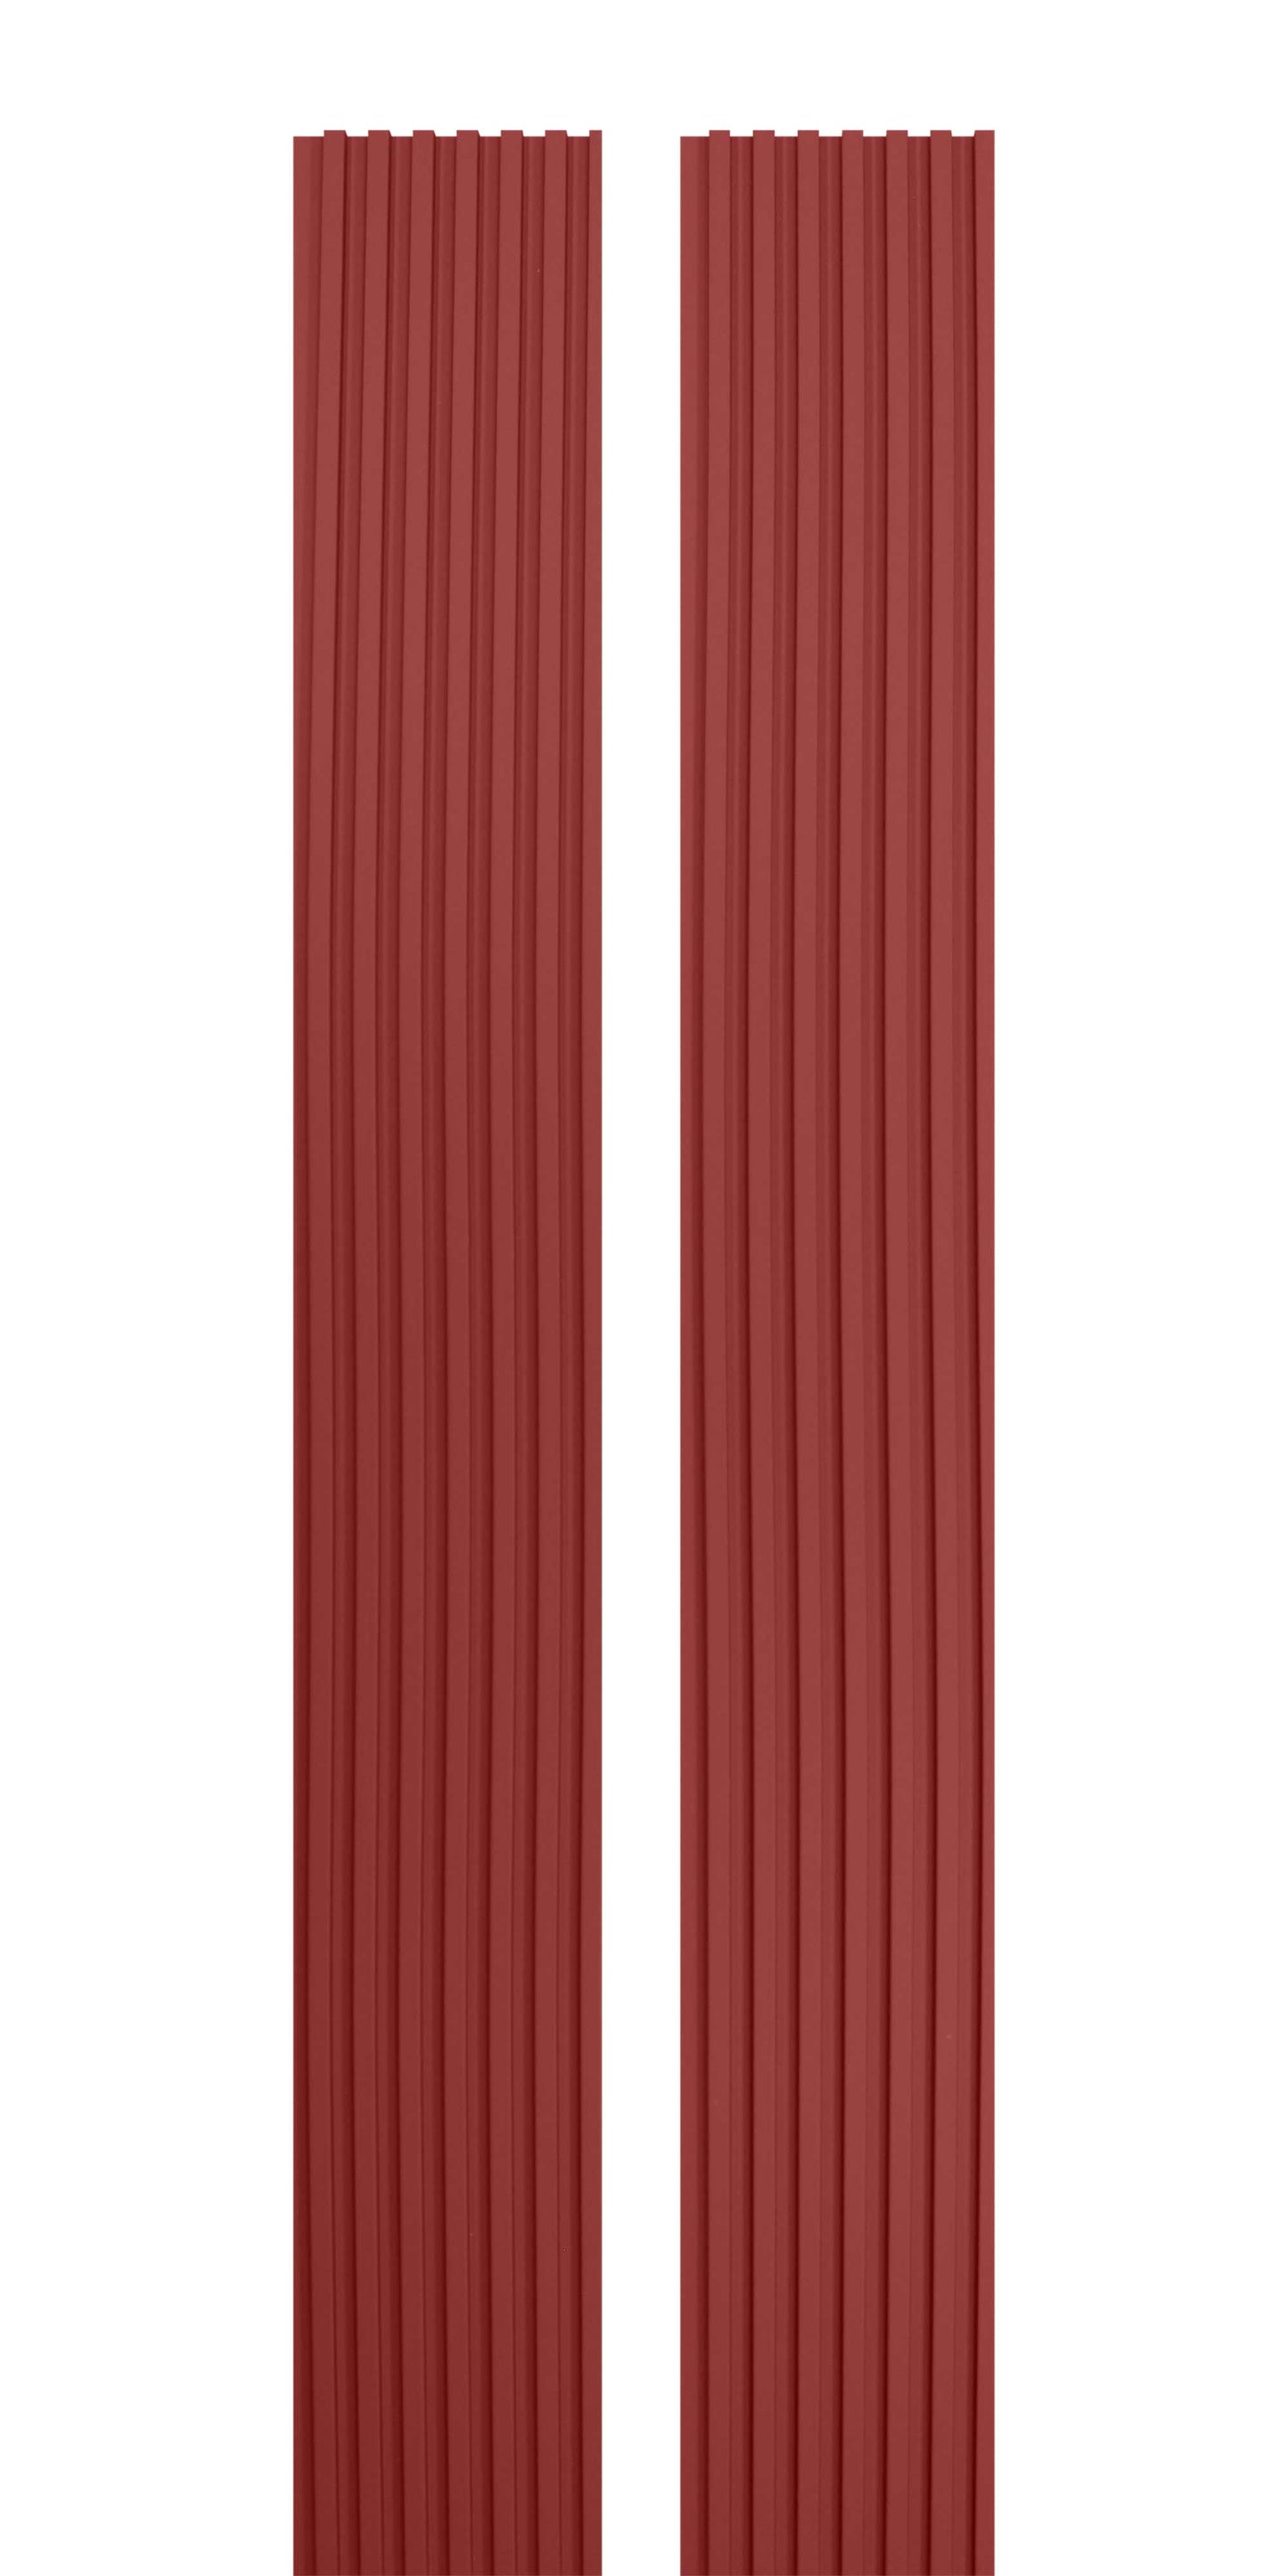 Satin Red Slat Wood Panels for Walls